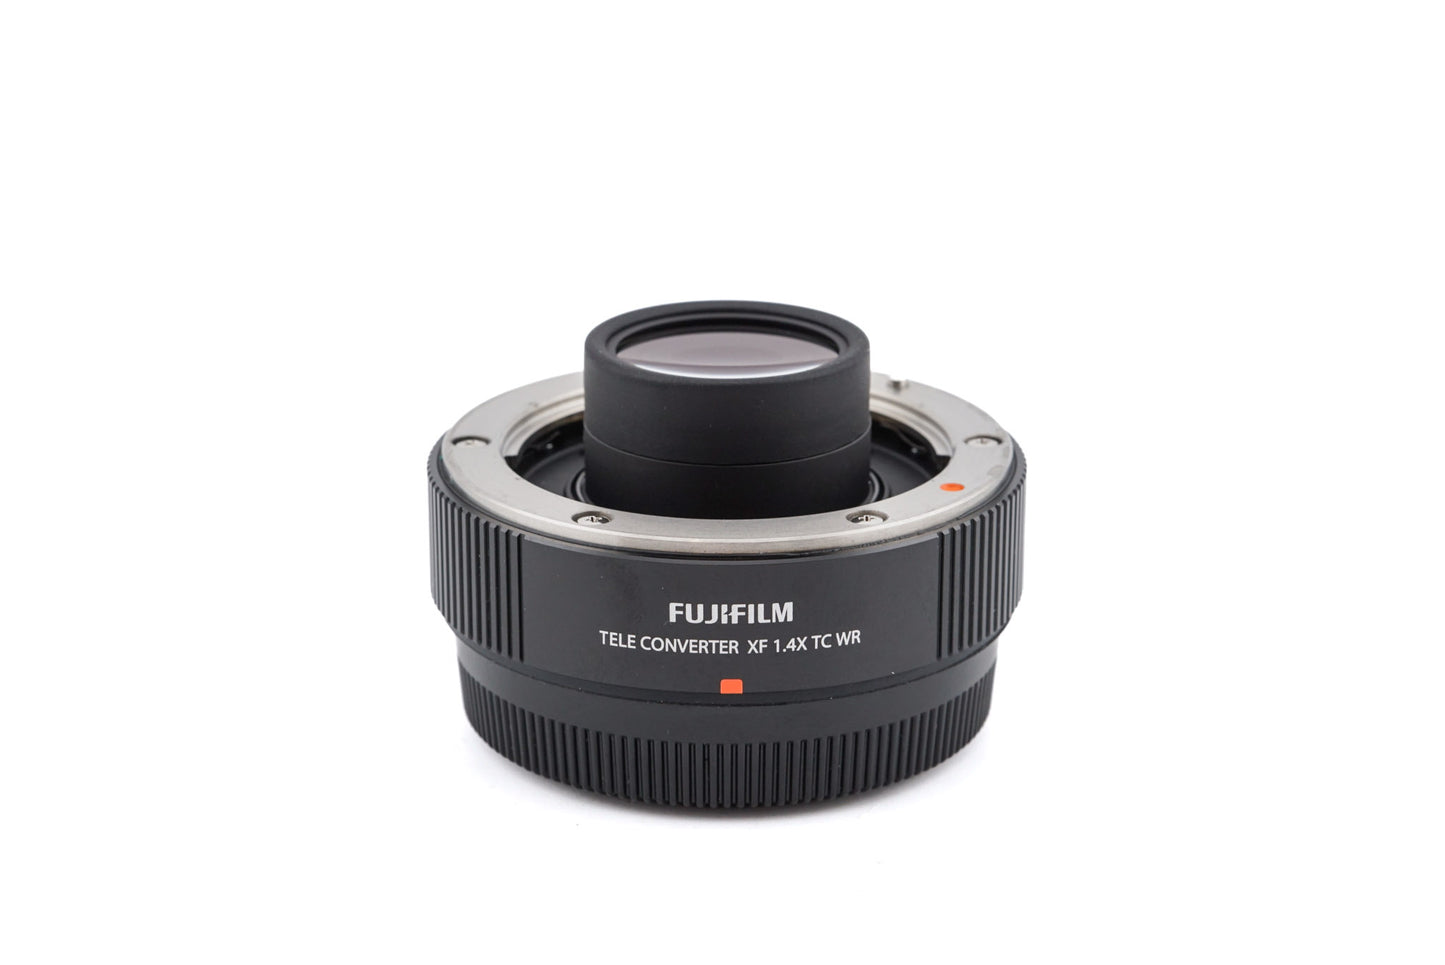 Fujifilm 1.4x TC WR Teleconverter XF - Accessory